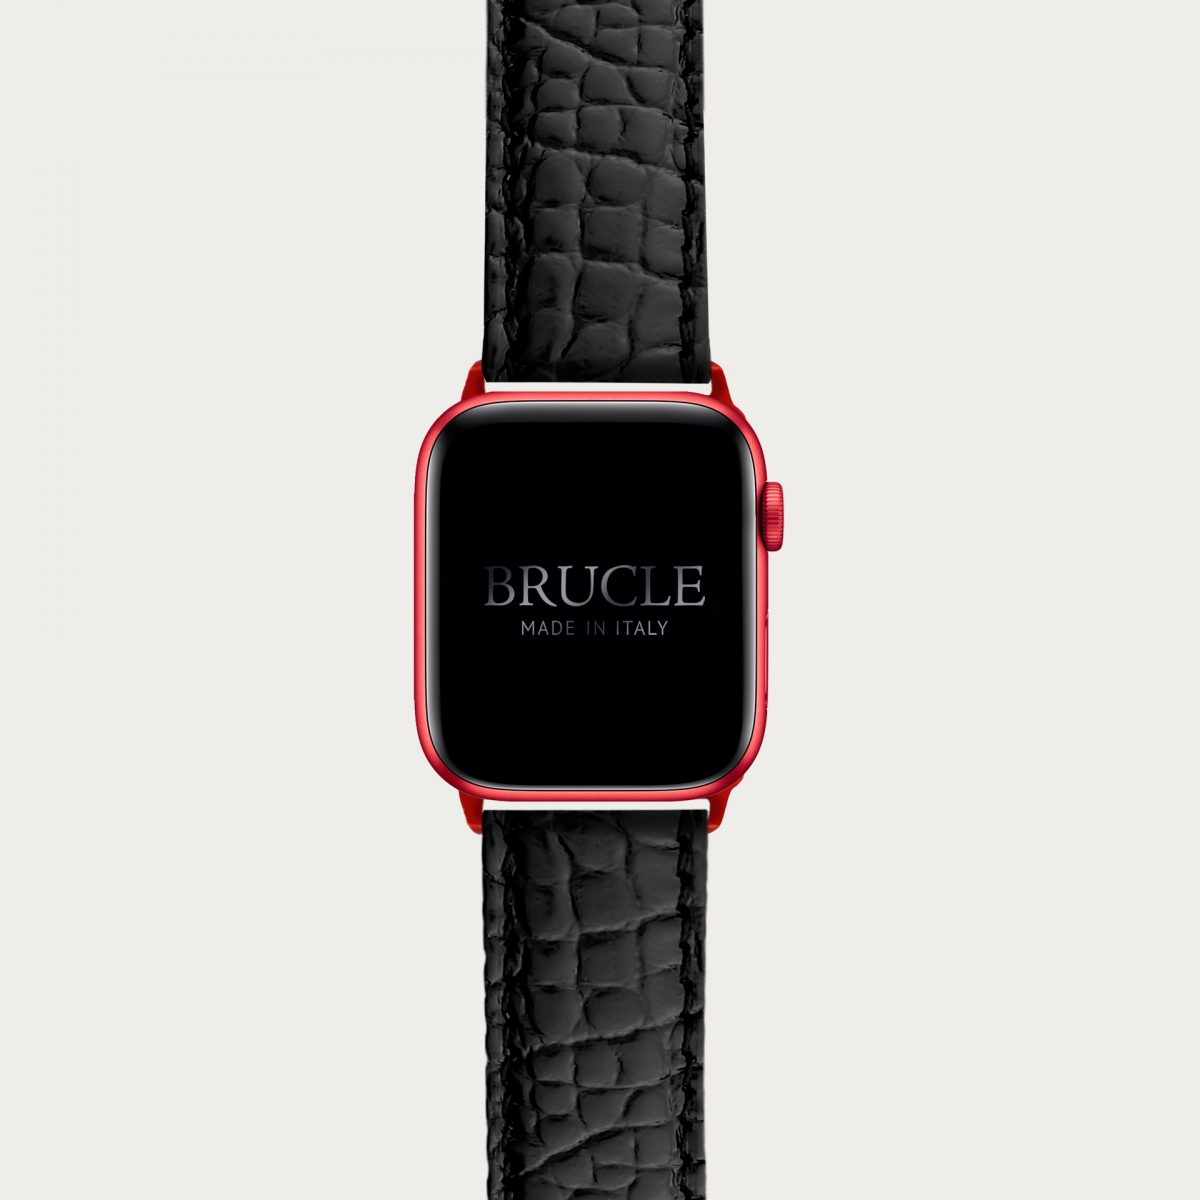 Cinturino nero in alligatore per orologio, Apple Watch e Samsung Galaxy Watch